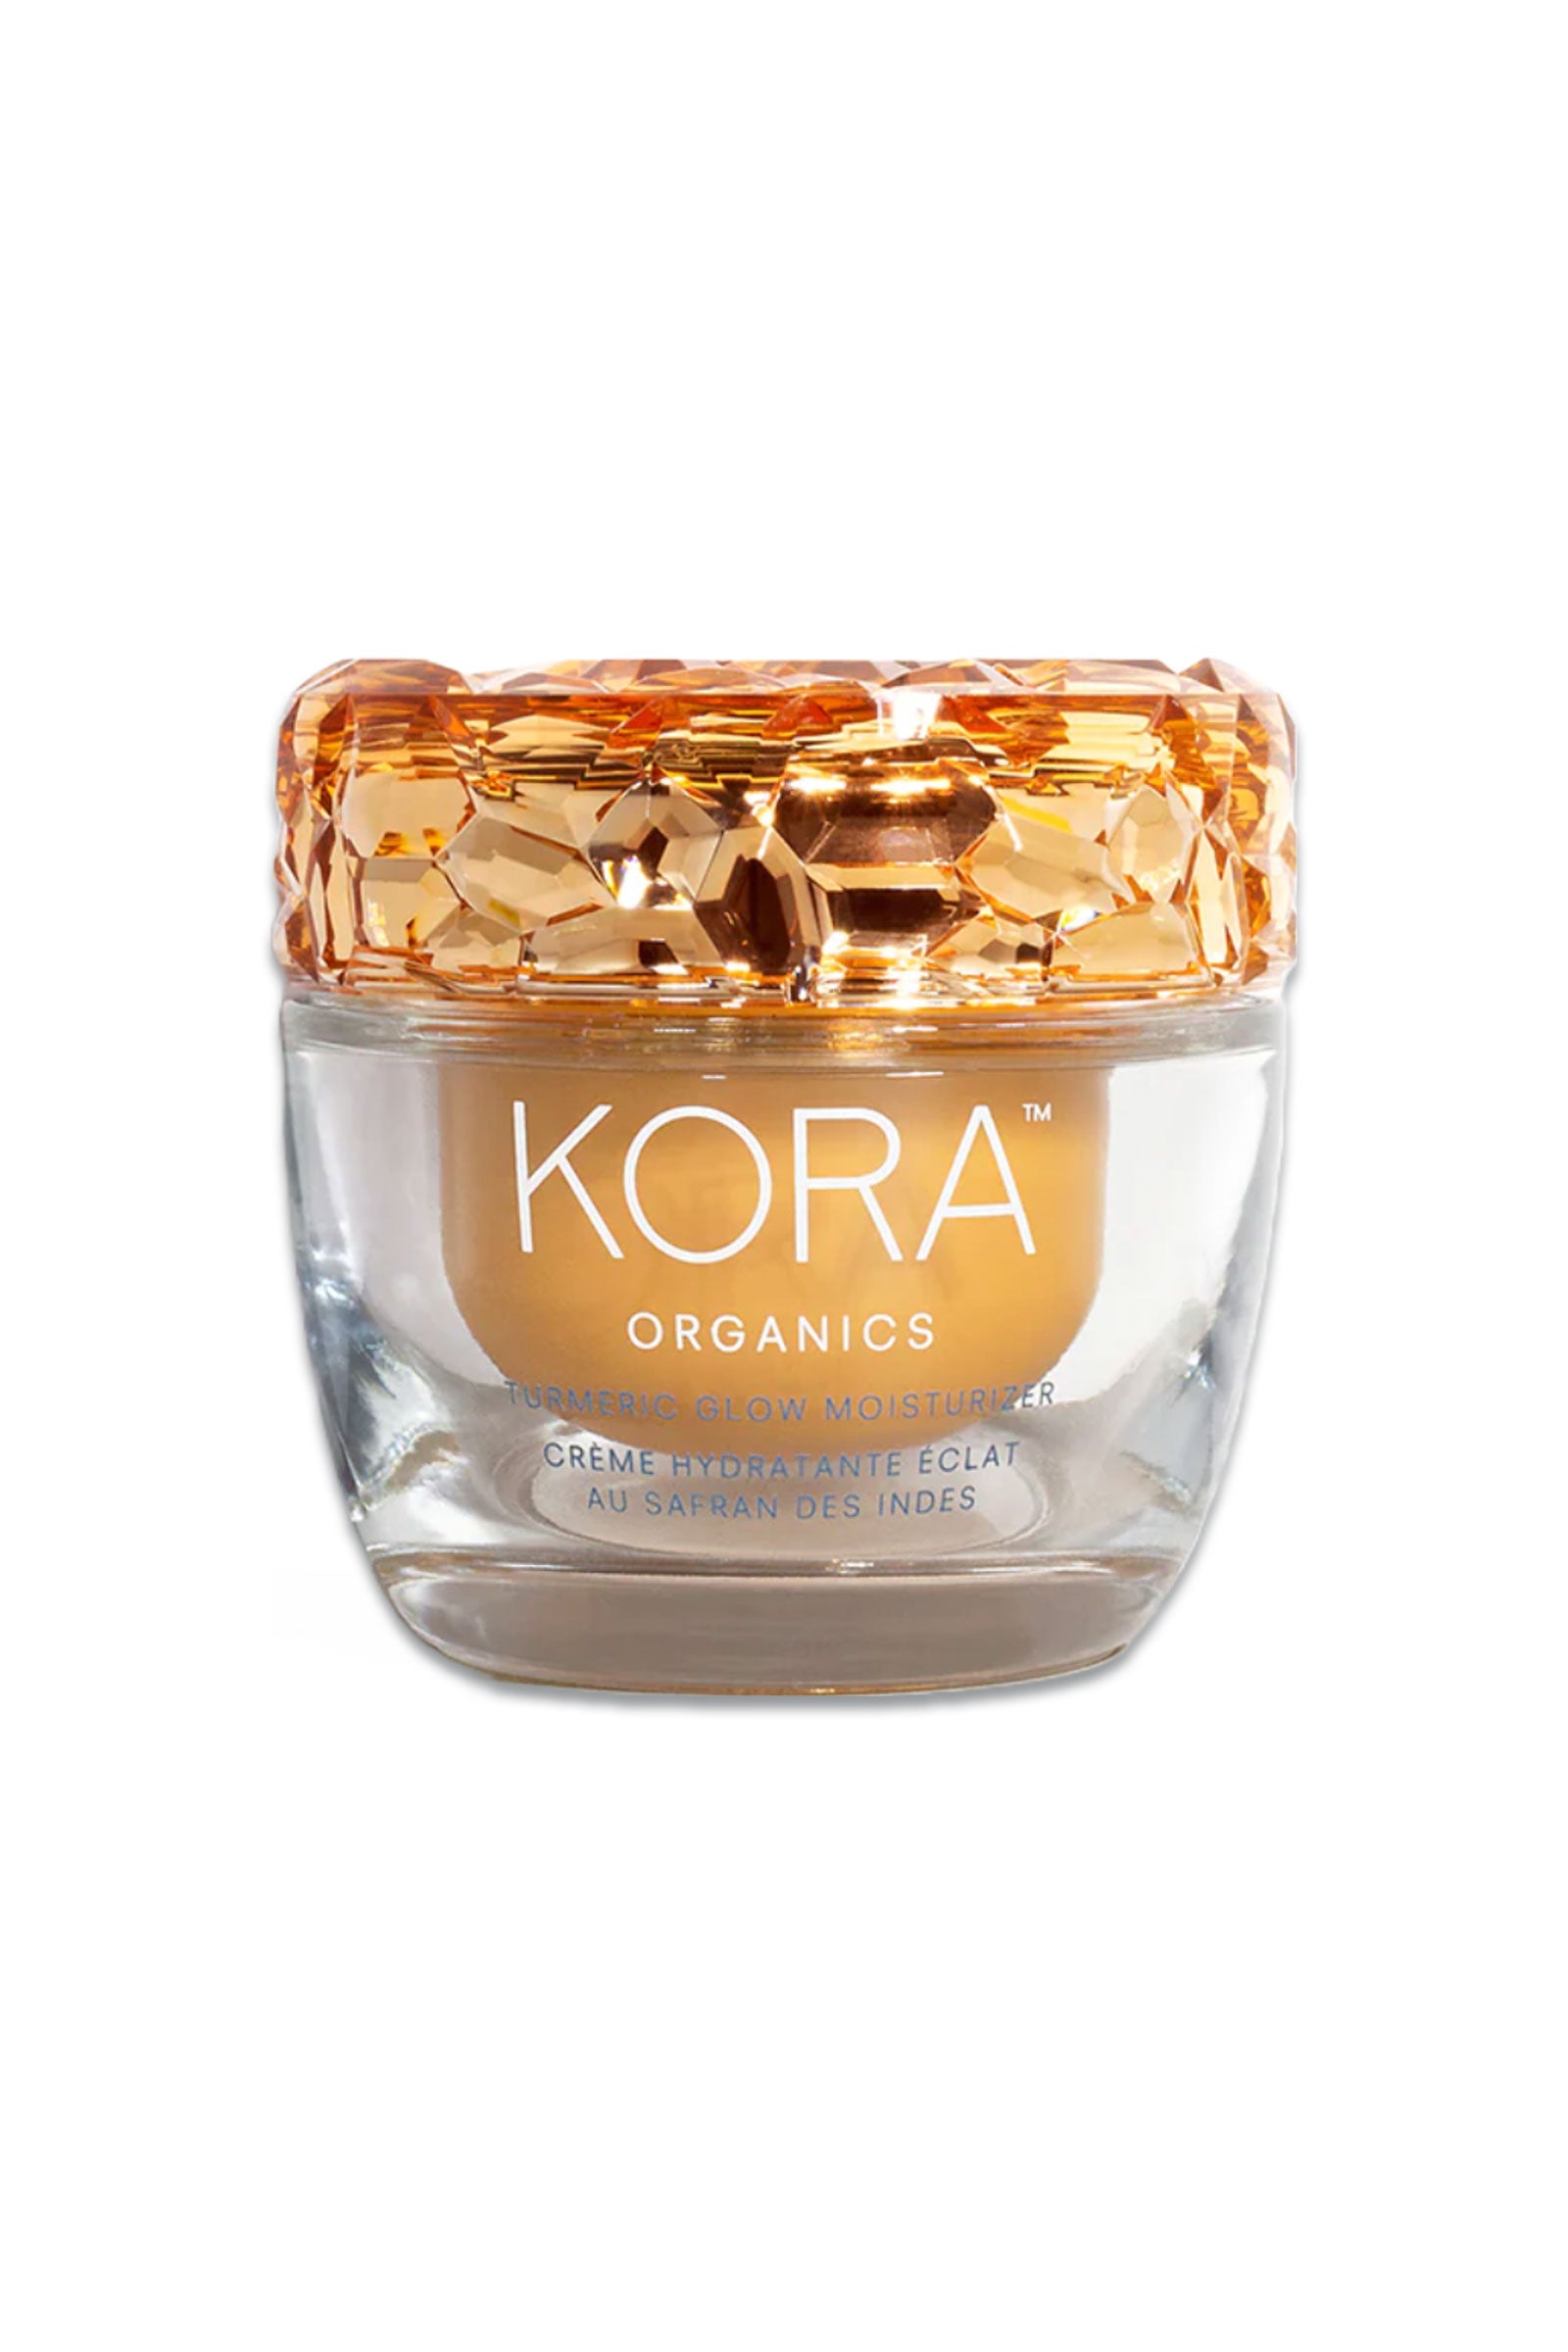 Miranda Kerr Interview On Her Clean Beauty Brand KORA Organics